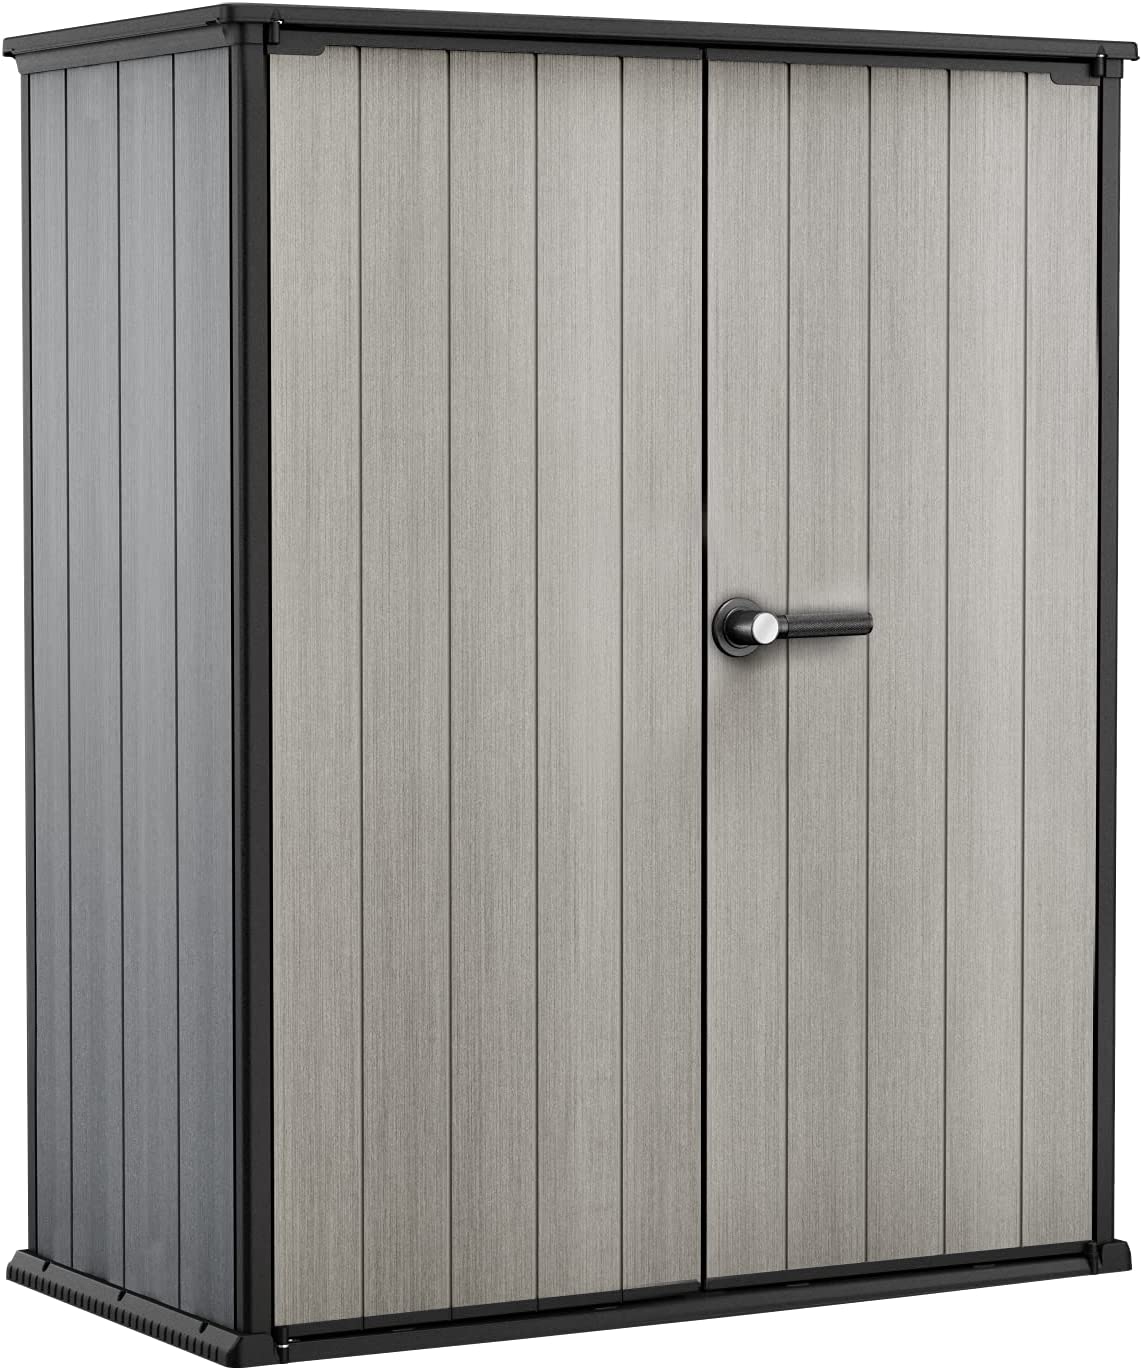 Armadio porta attrezzi da giardino Keter High-Store plus grigio 170,4x140x73,6 cm